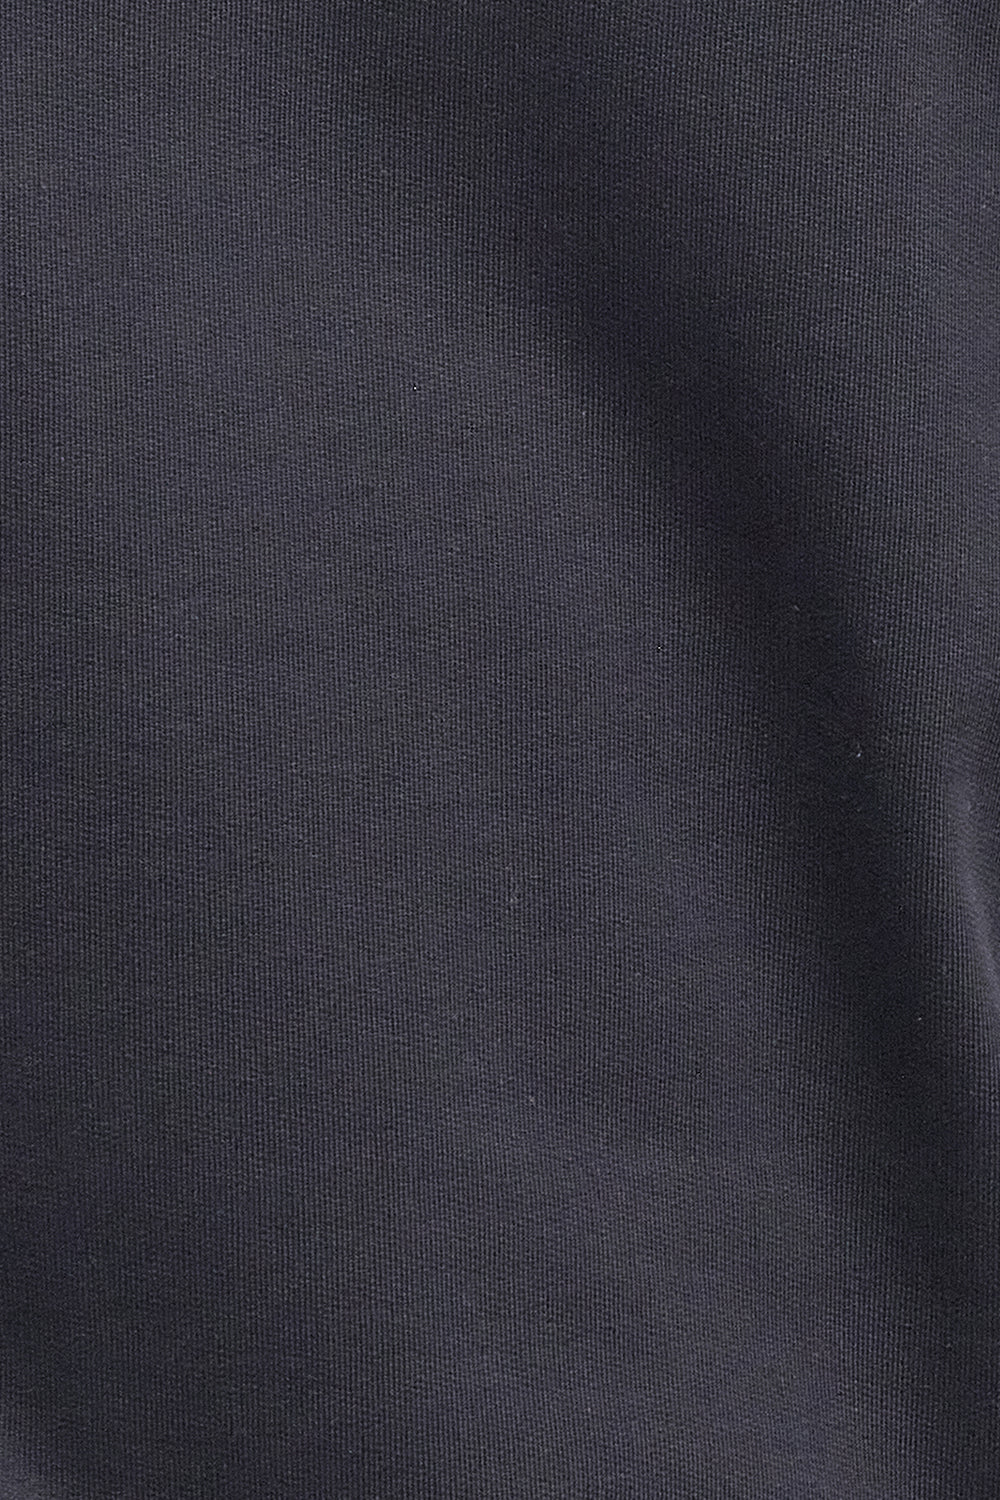 Barbour Nicholas Crew Sweatshirt (Black) Fabric